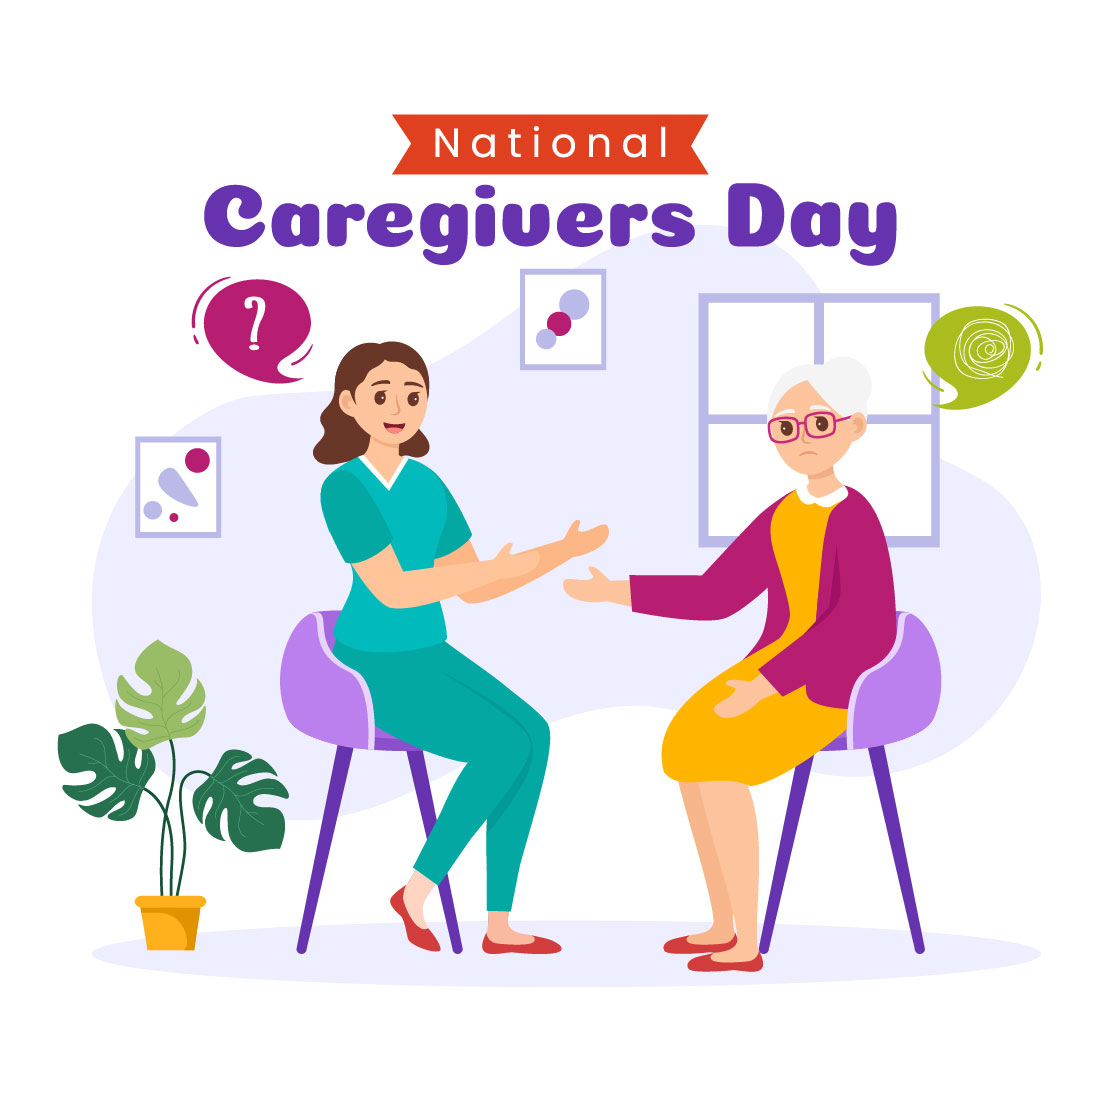 12 National Caregivers Day Illustration cover image.